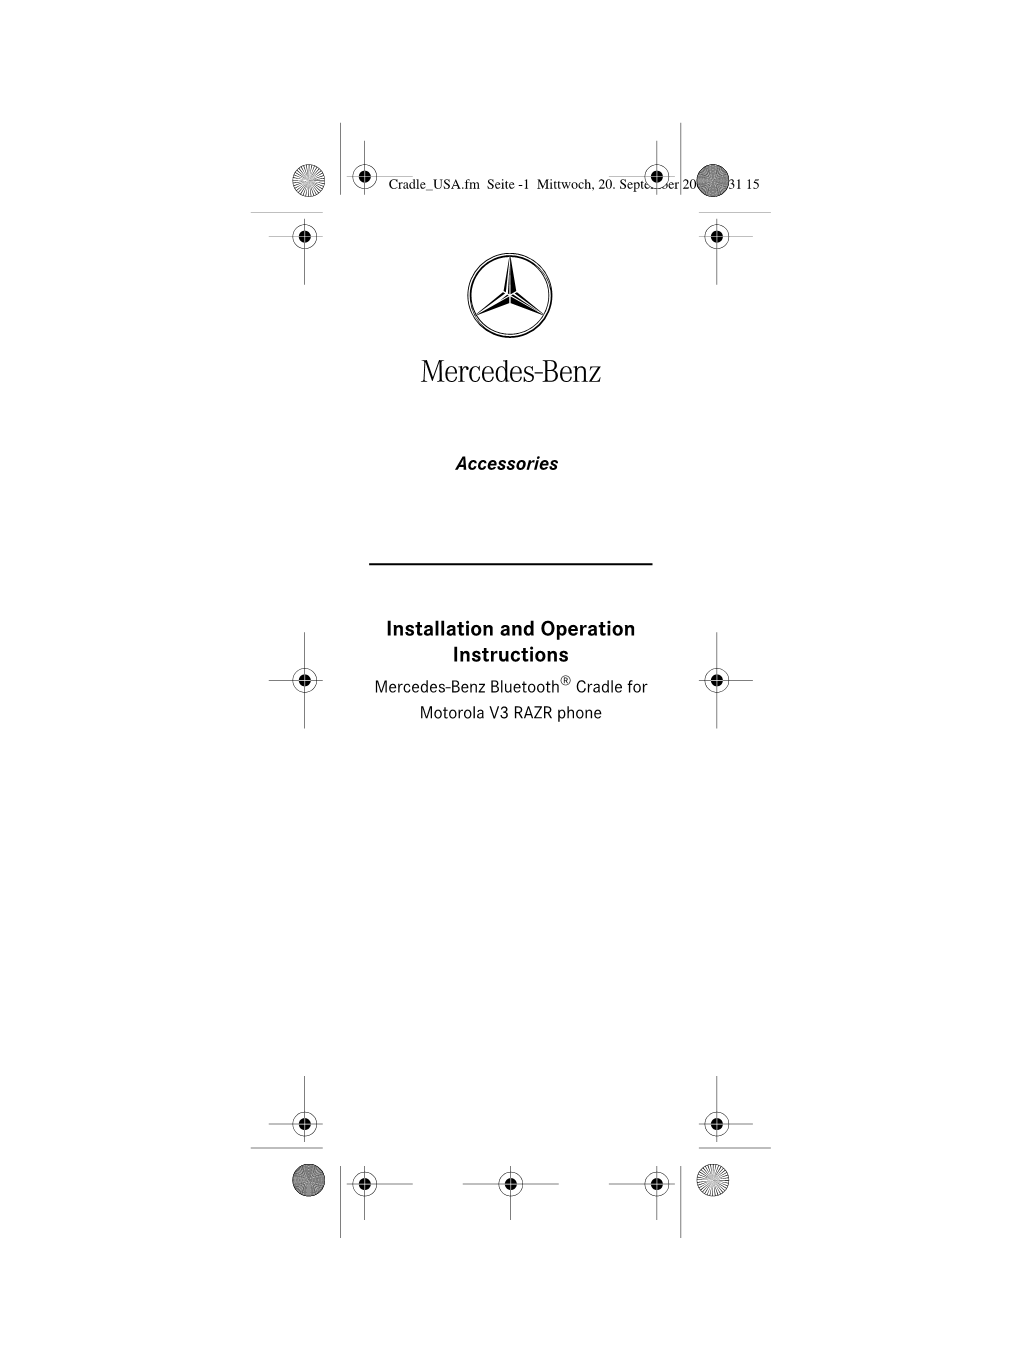 Installation and Operation Instructions Mercedes-Benz Bluetooth® Cradle for Motorola V3 RAZR Phone Cradle USA.Fm Seite 0 Mittwoch, 20